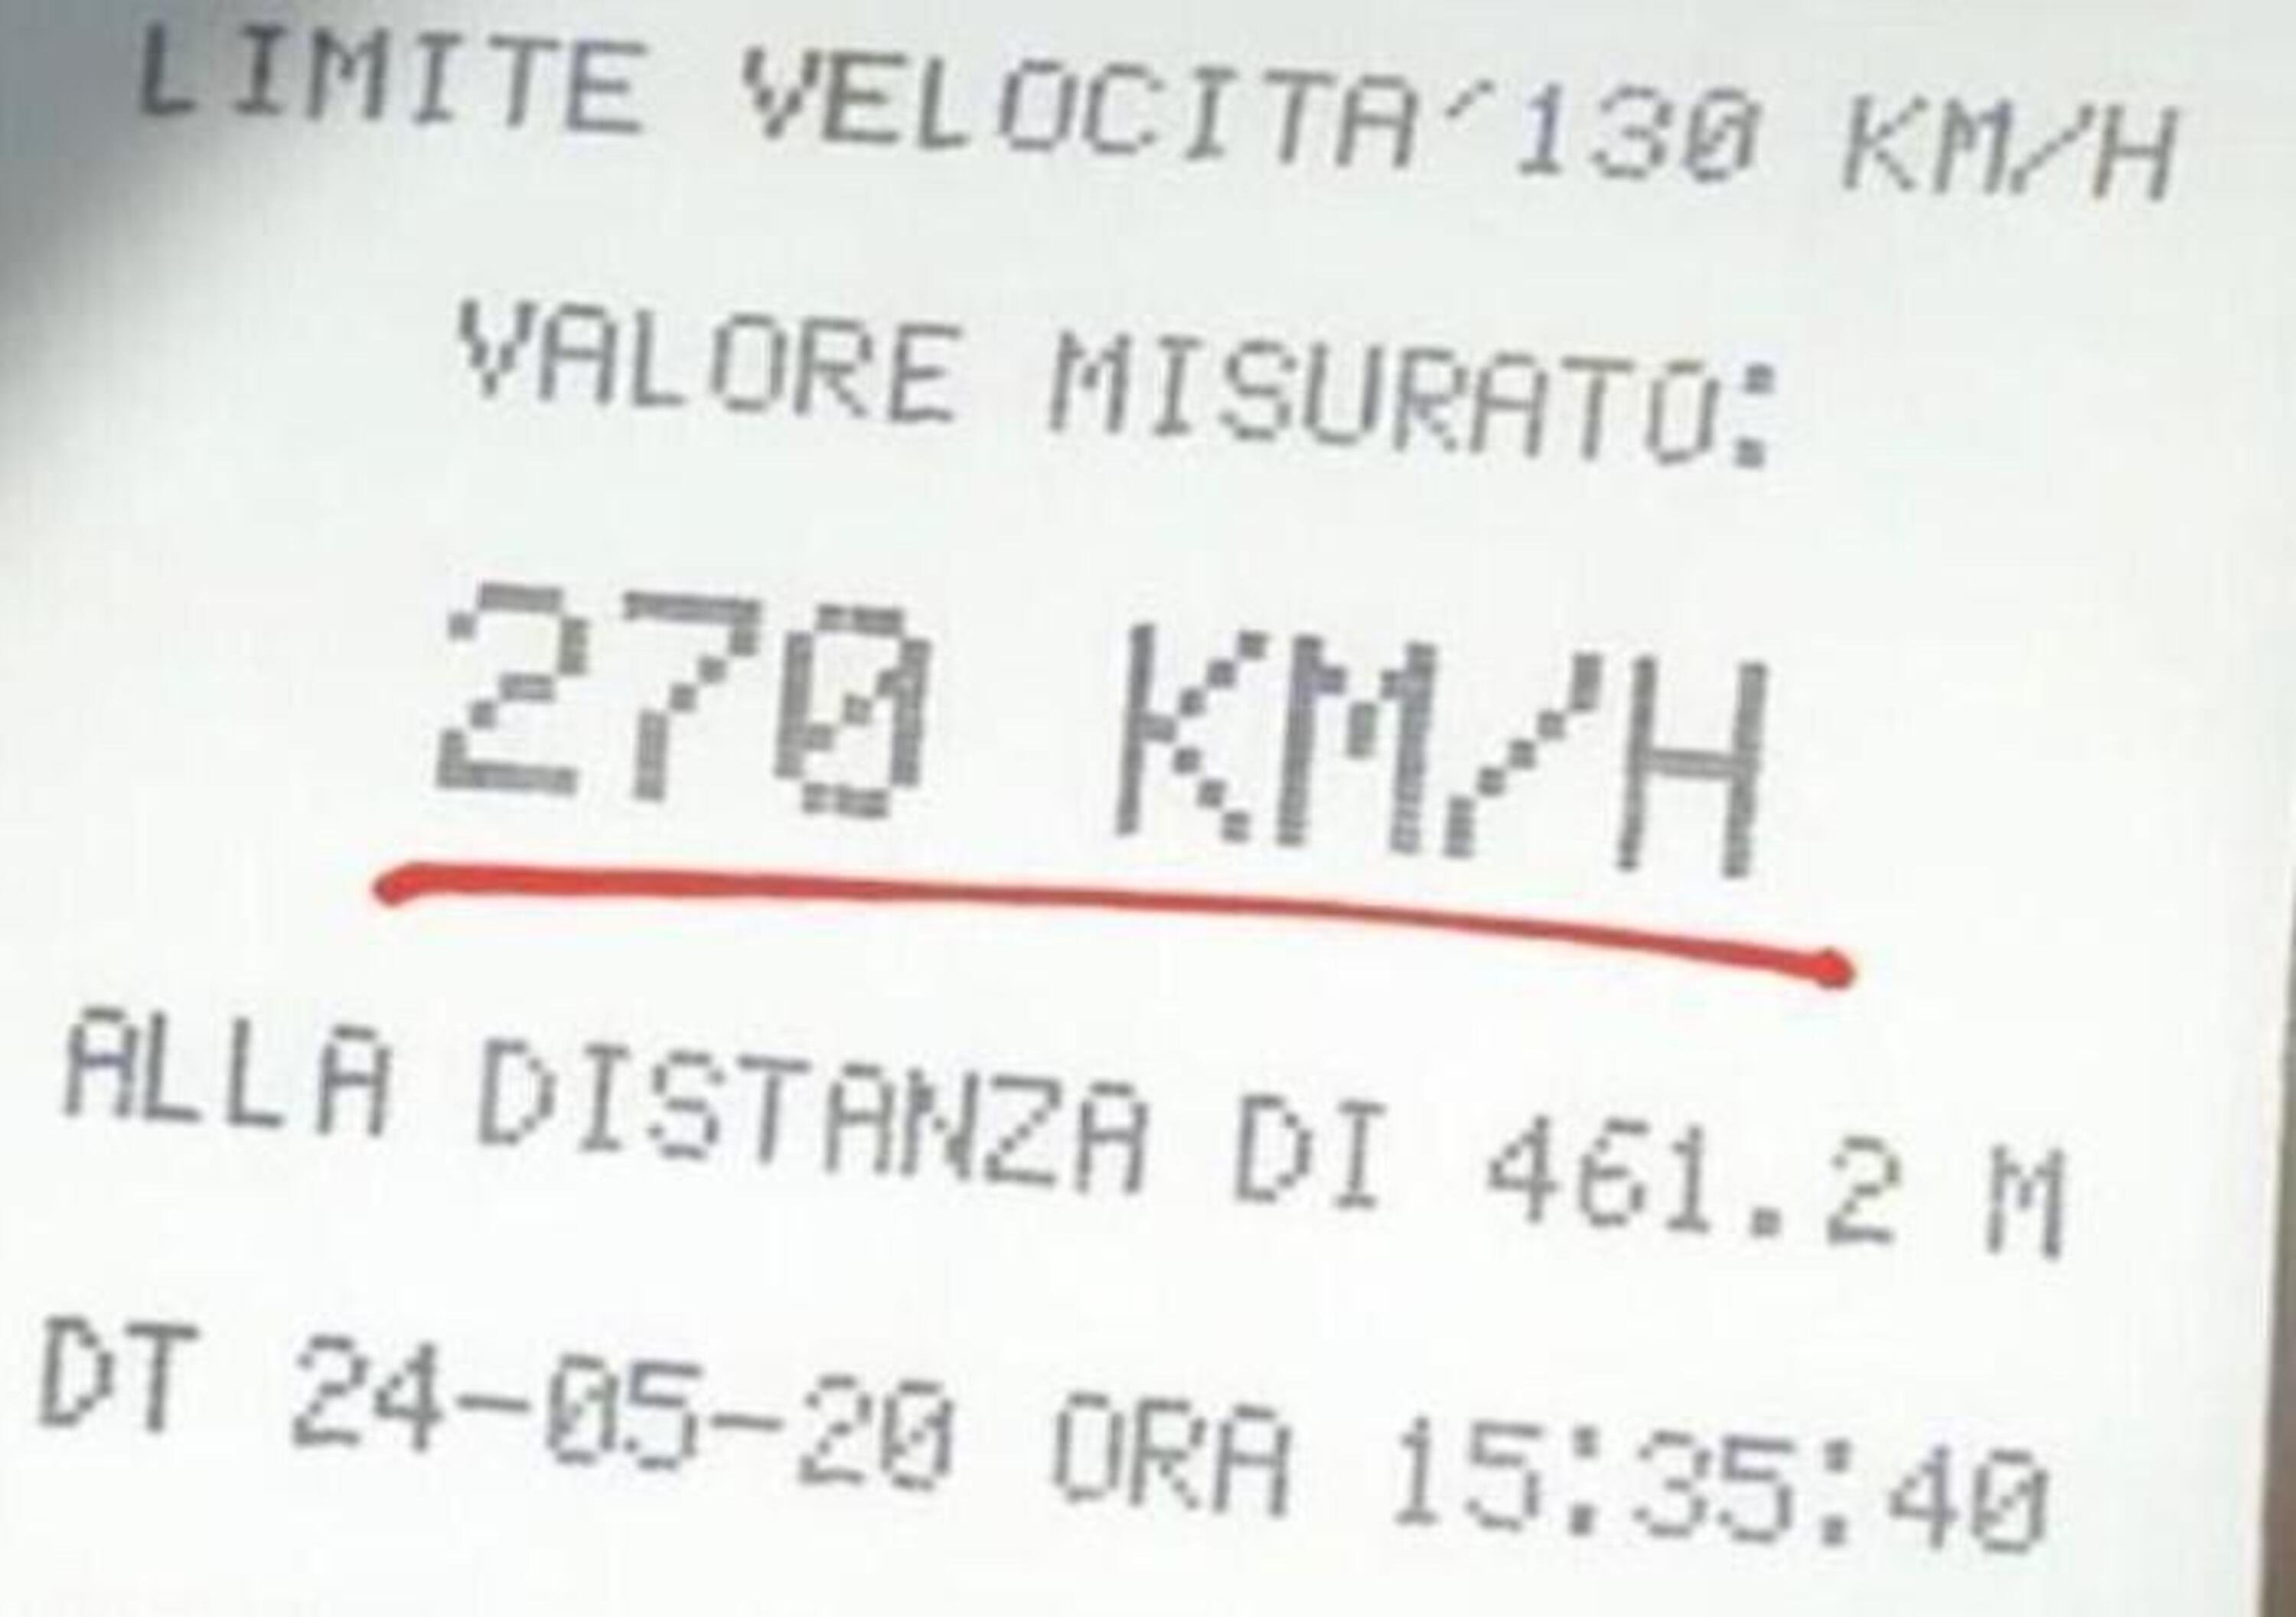 Porsche a 270 km/h in A4 tra Verona e Sommacampagna. Patente ritirata e 847 euro di multa!